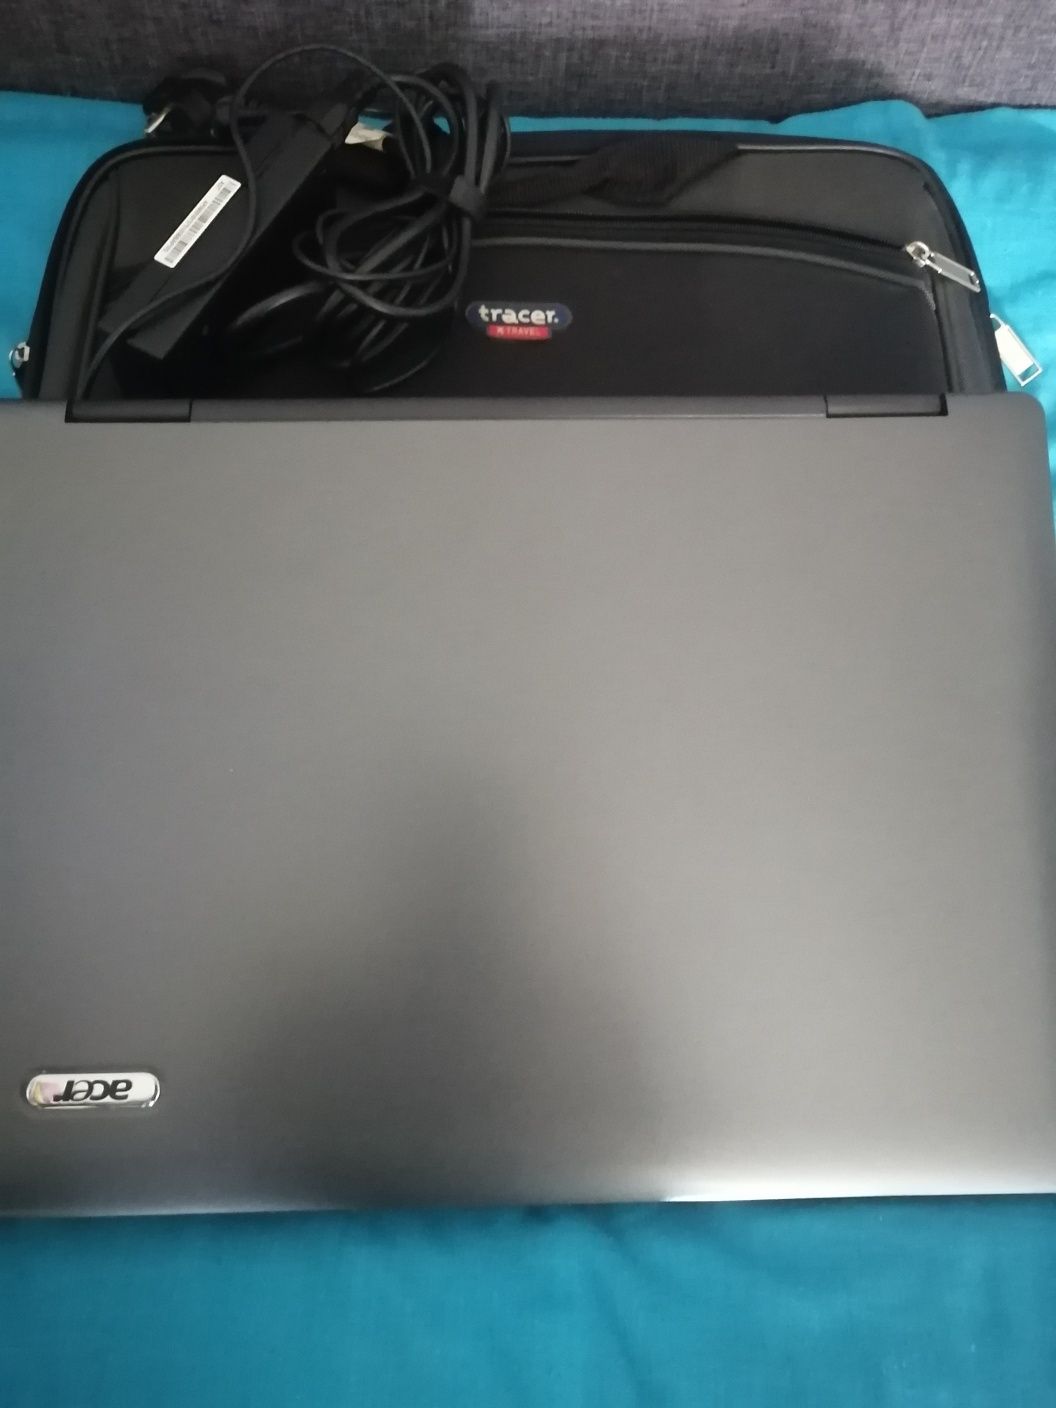 Acer, 17 cali, extensa 7620/7220 series